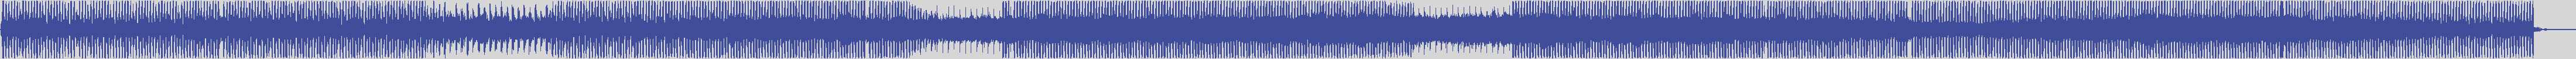 upr [UPR090] Norma Loy - Baphomet Sunrise [Salem Unsigned Rmx] audio wave form